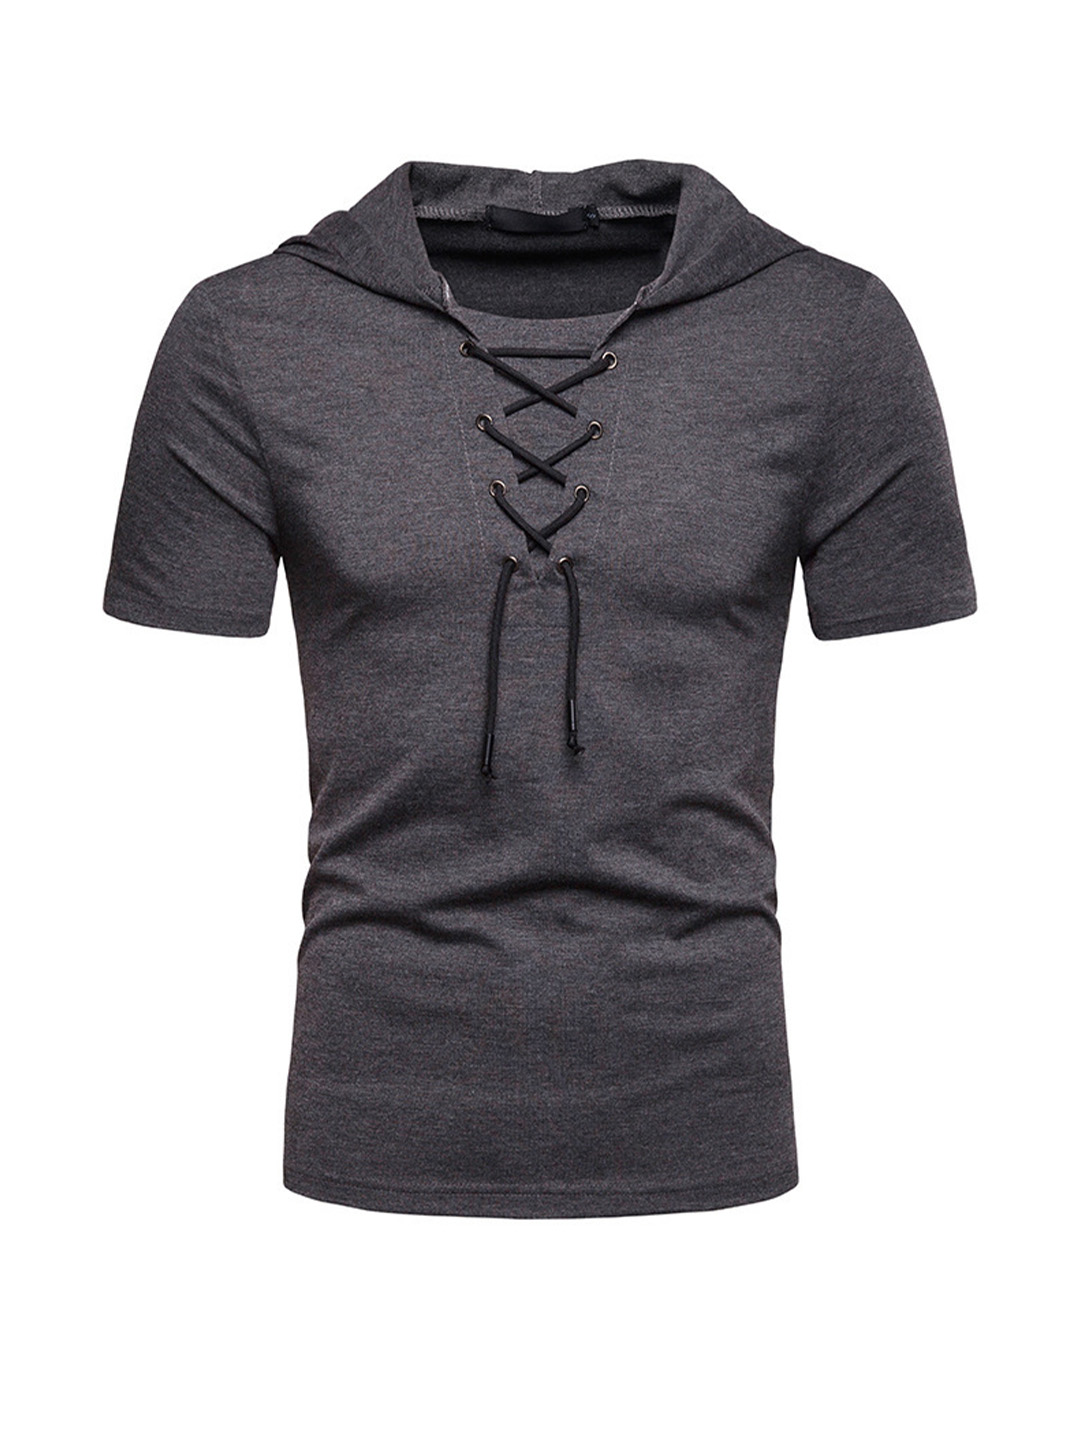 Men's Lace-up Short Sleeve Hooded T-shirt-poisonstreetwear.com